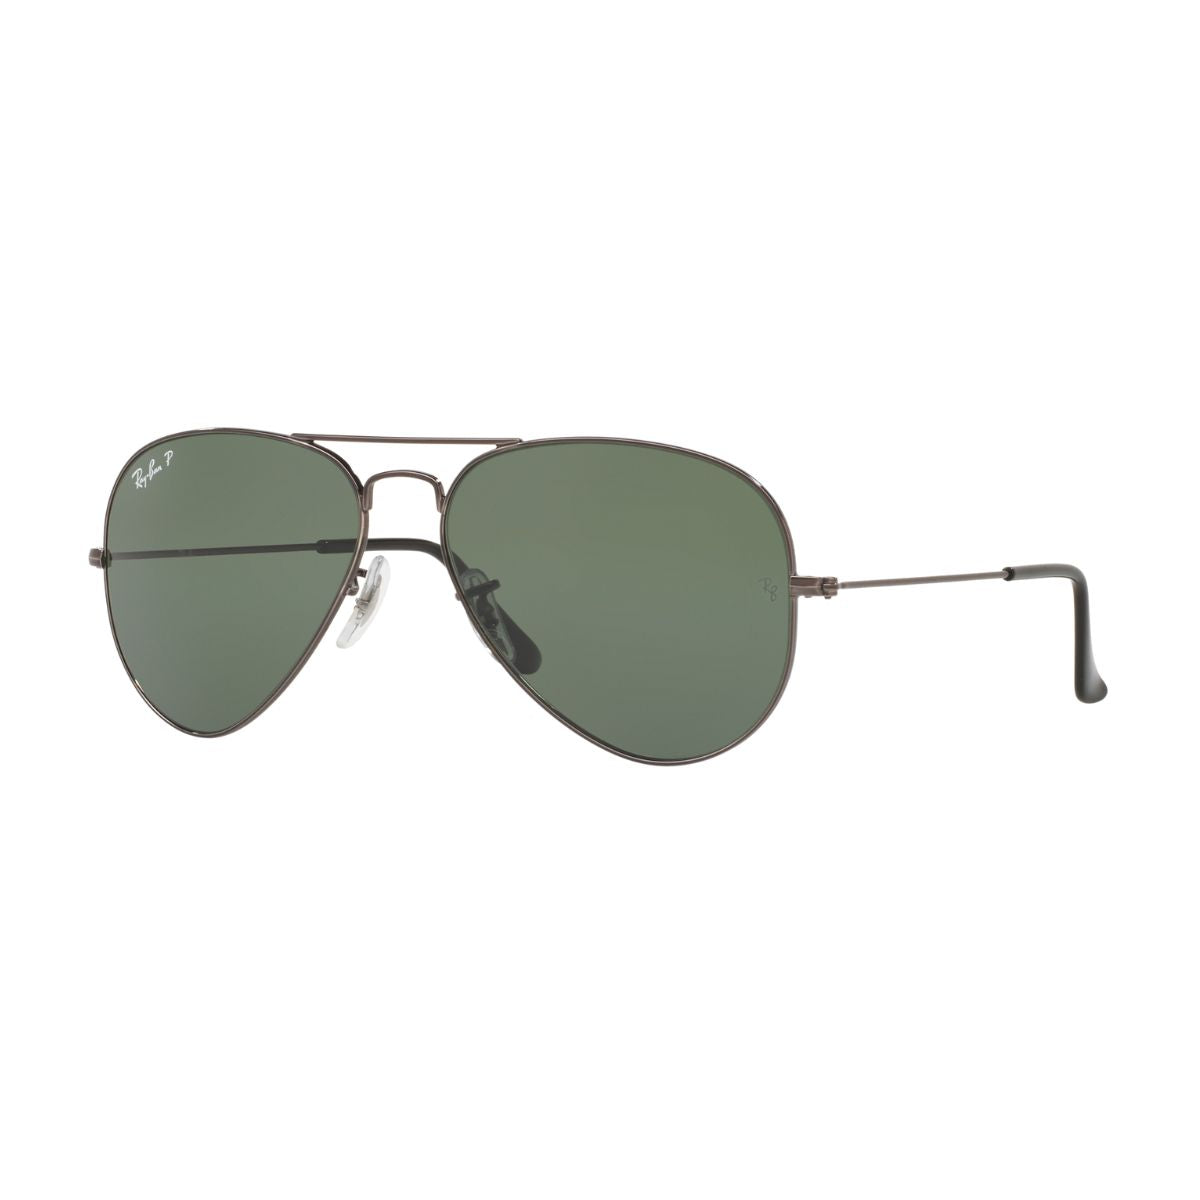 "Rayban 3025 004/58 Aviator Sunglasses For Men Online At Optorium"